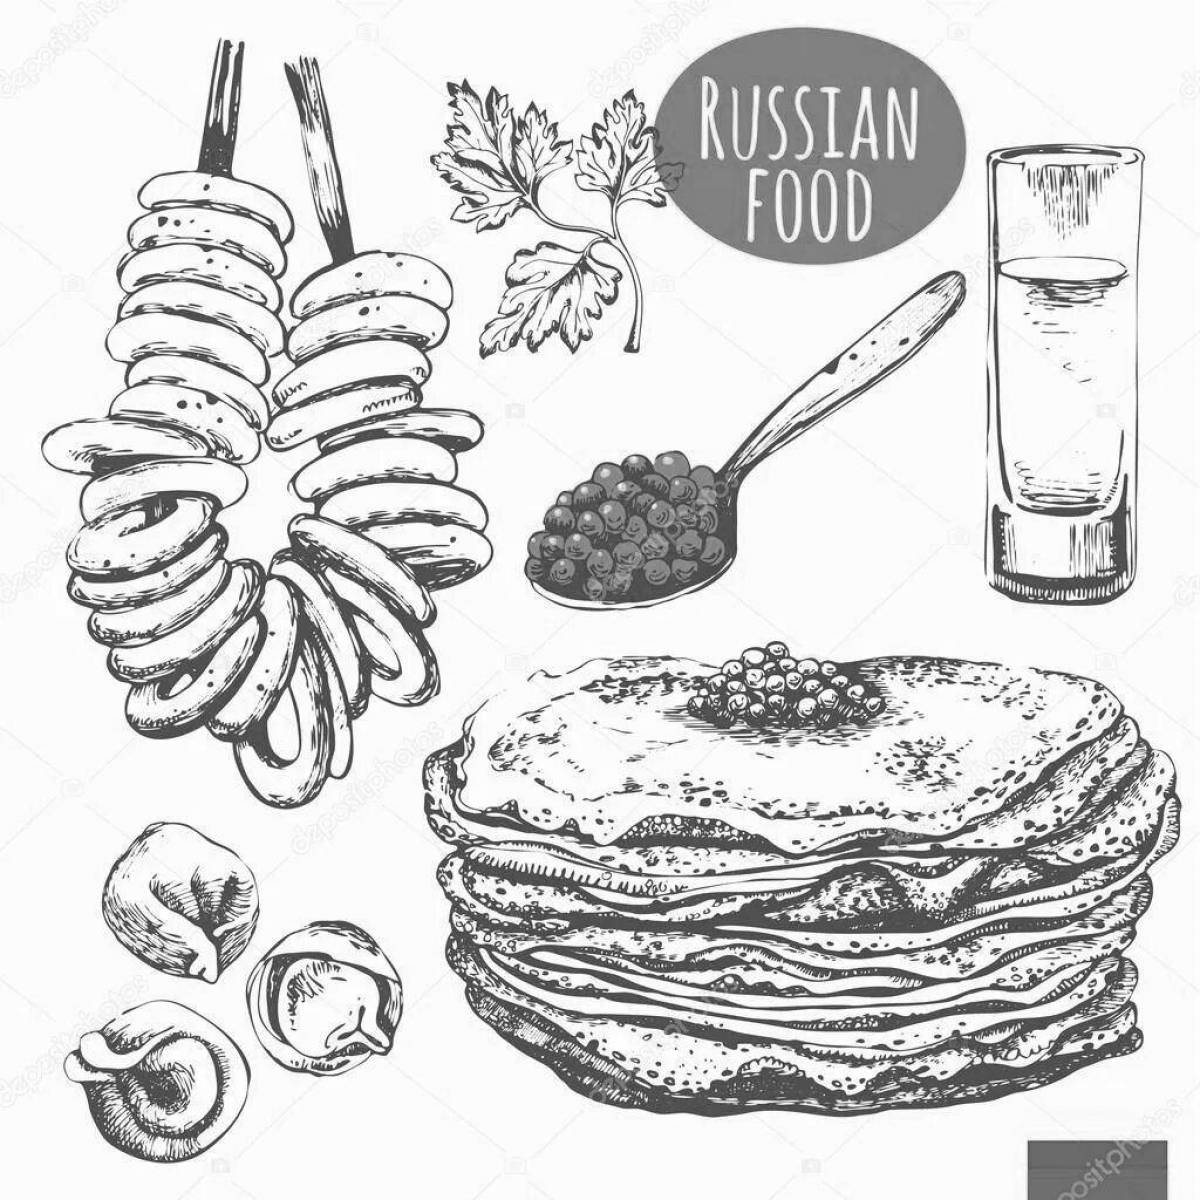 Fun Russian food coloring book